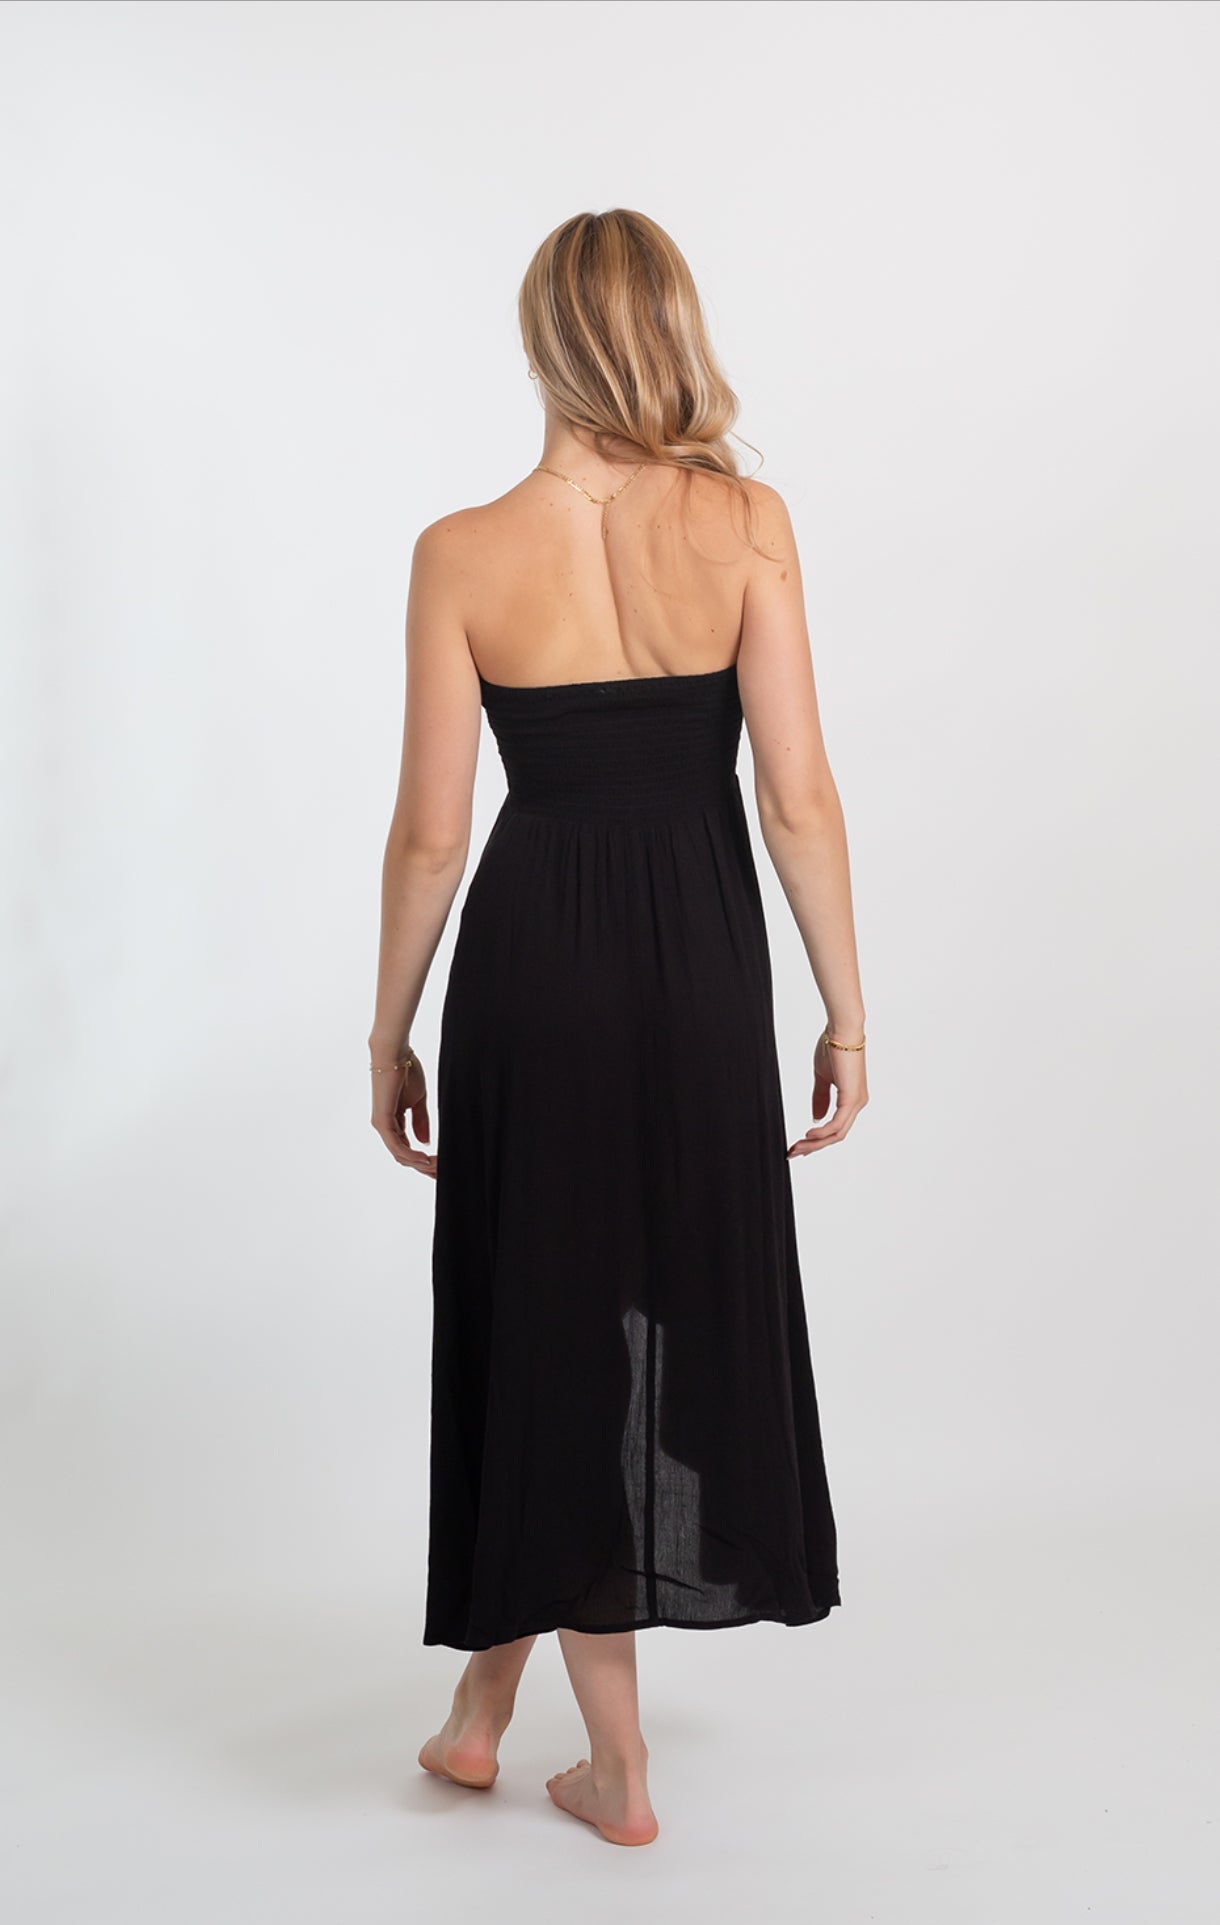 Miami Convertible Bandeau Dress - black - Blue Sky Fashions & Lingerie